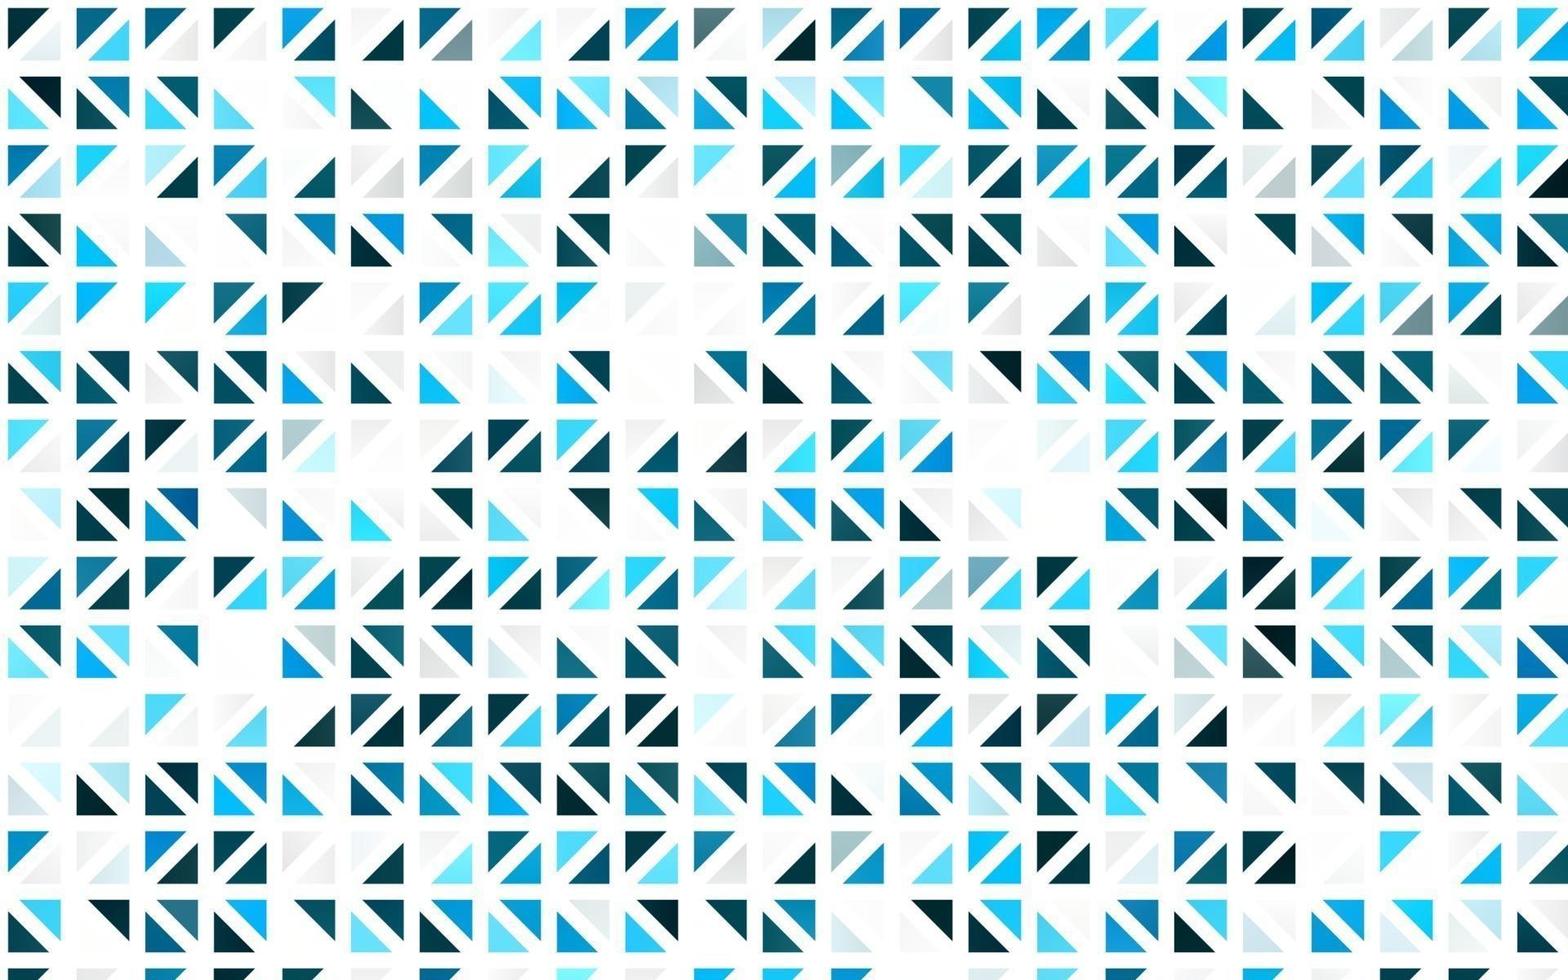 copertina senza cuciture vettoriale blu chiaro in stile poligonale.